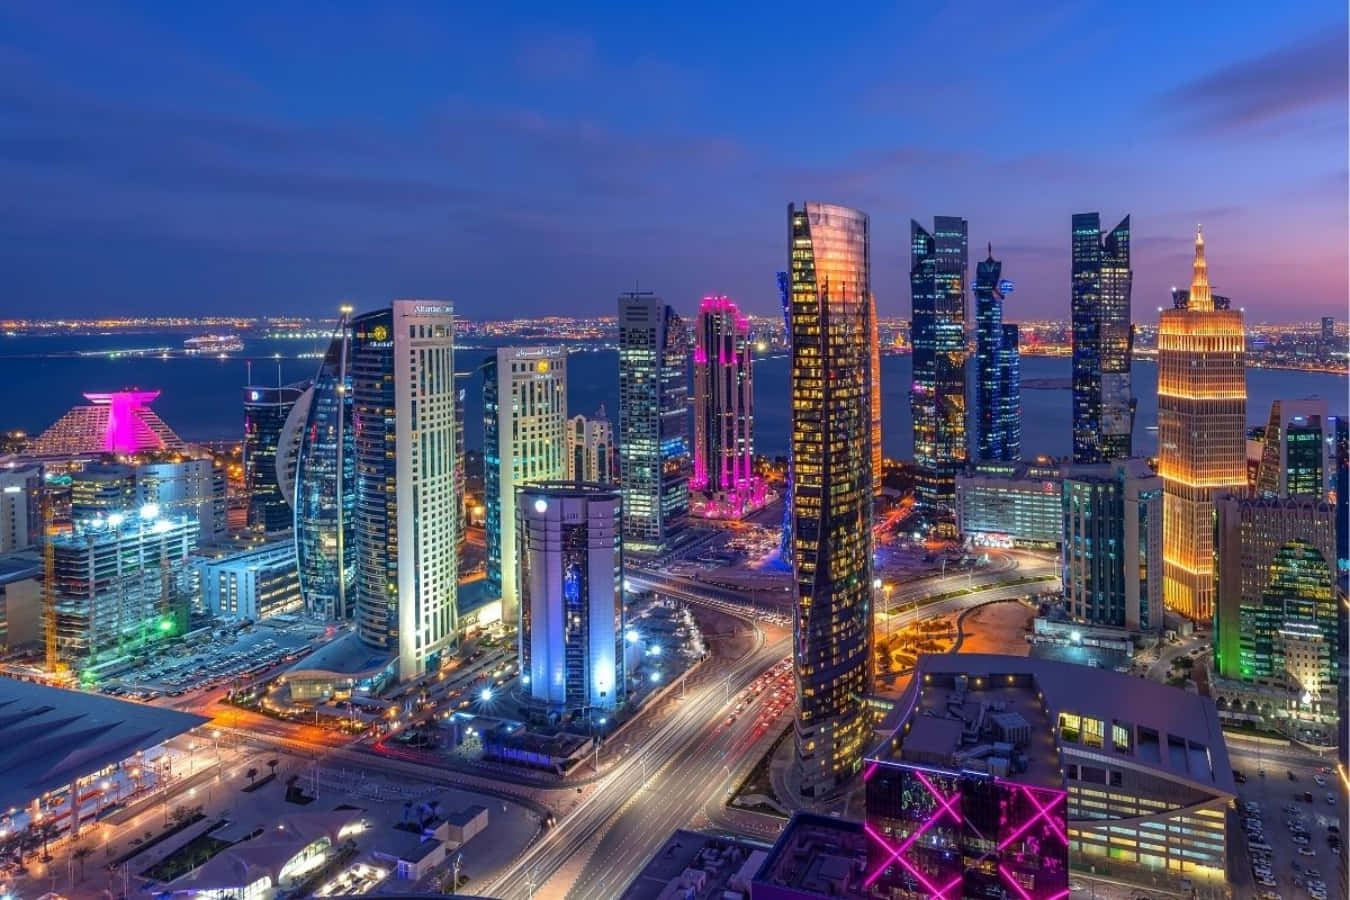 Qatar's Architecture Glows at Night